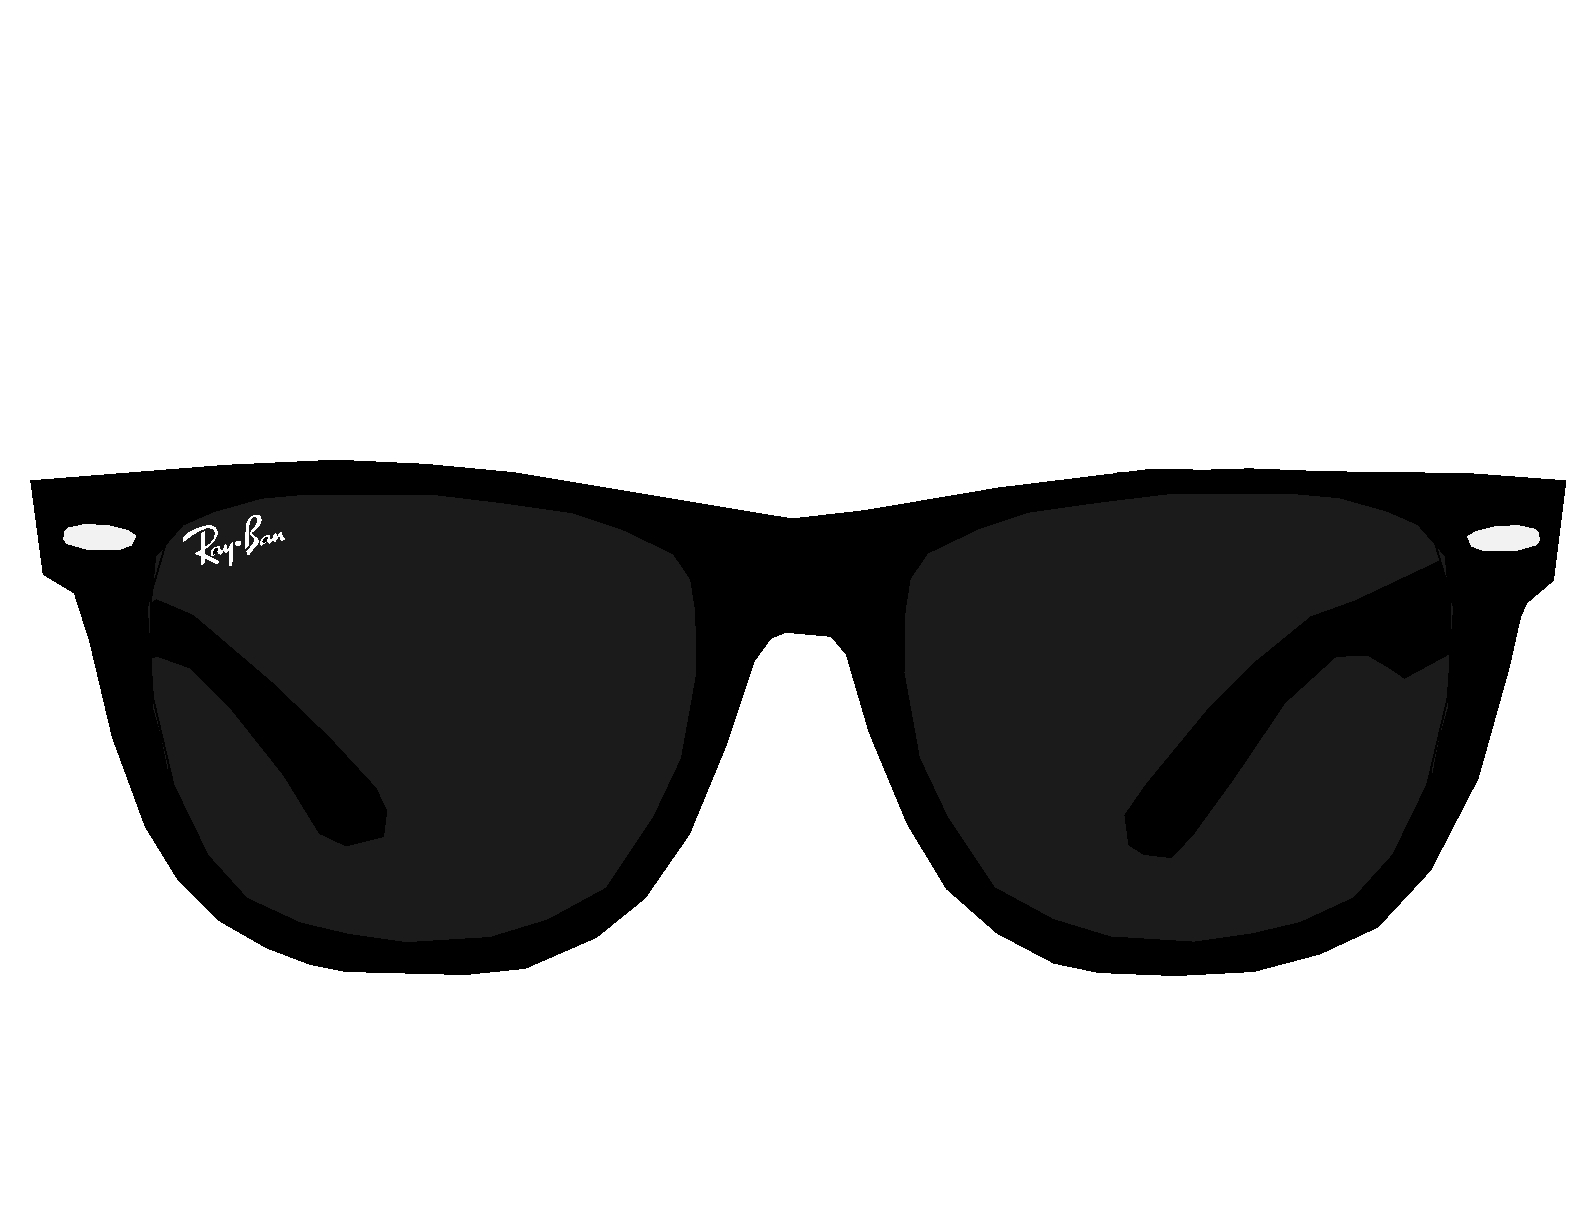 Sunglasses ray ban black and white glasses clip art lindsey kelk